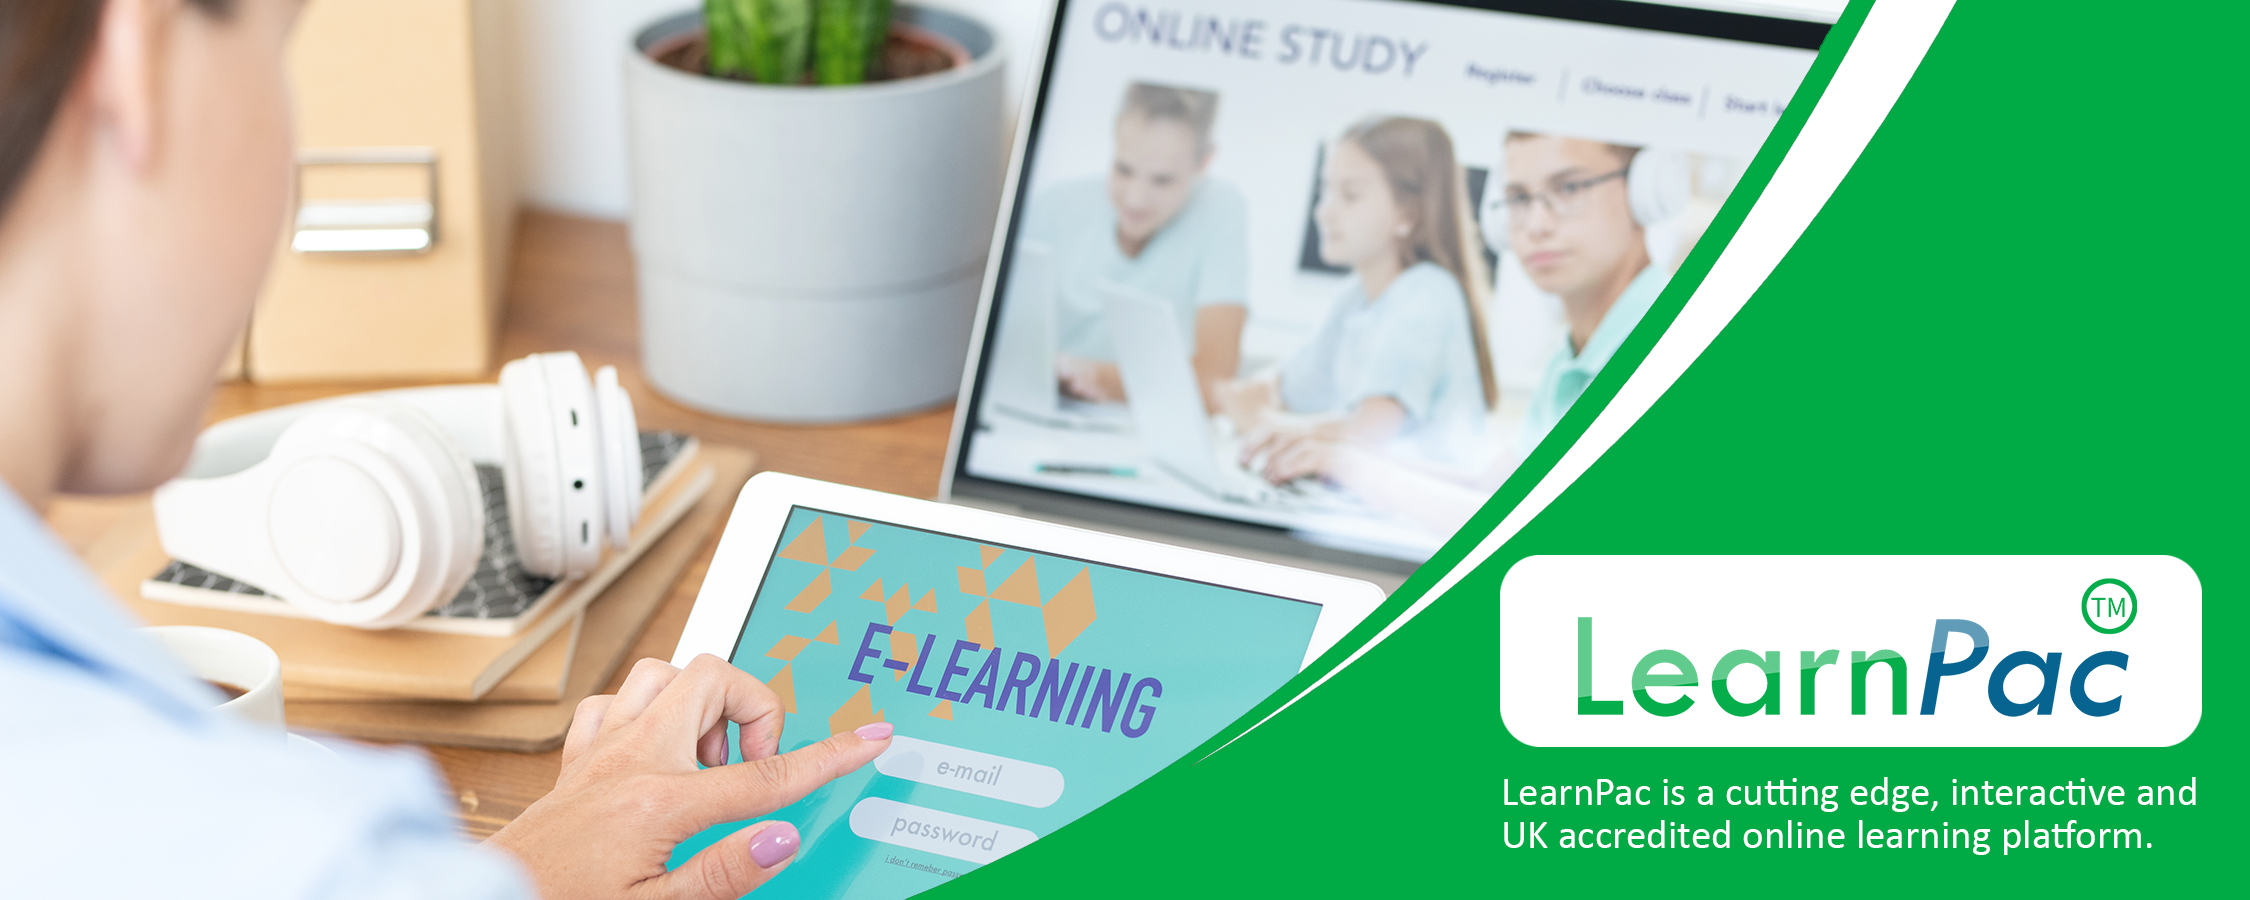 Statutory Duty of Candour - Online Learning Courses - E-Learning Courses - LearnPac Systems UK -